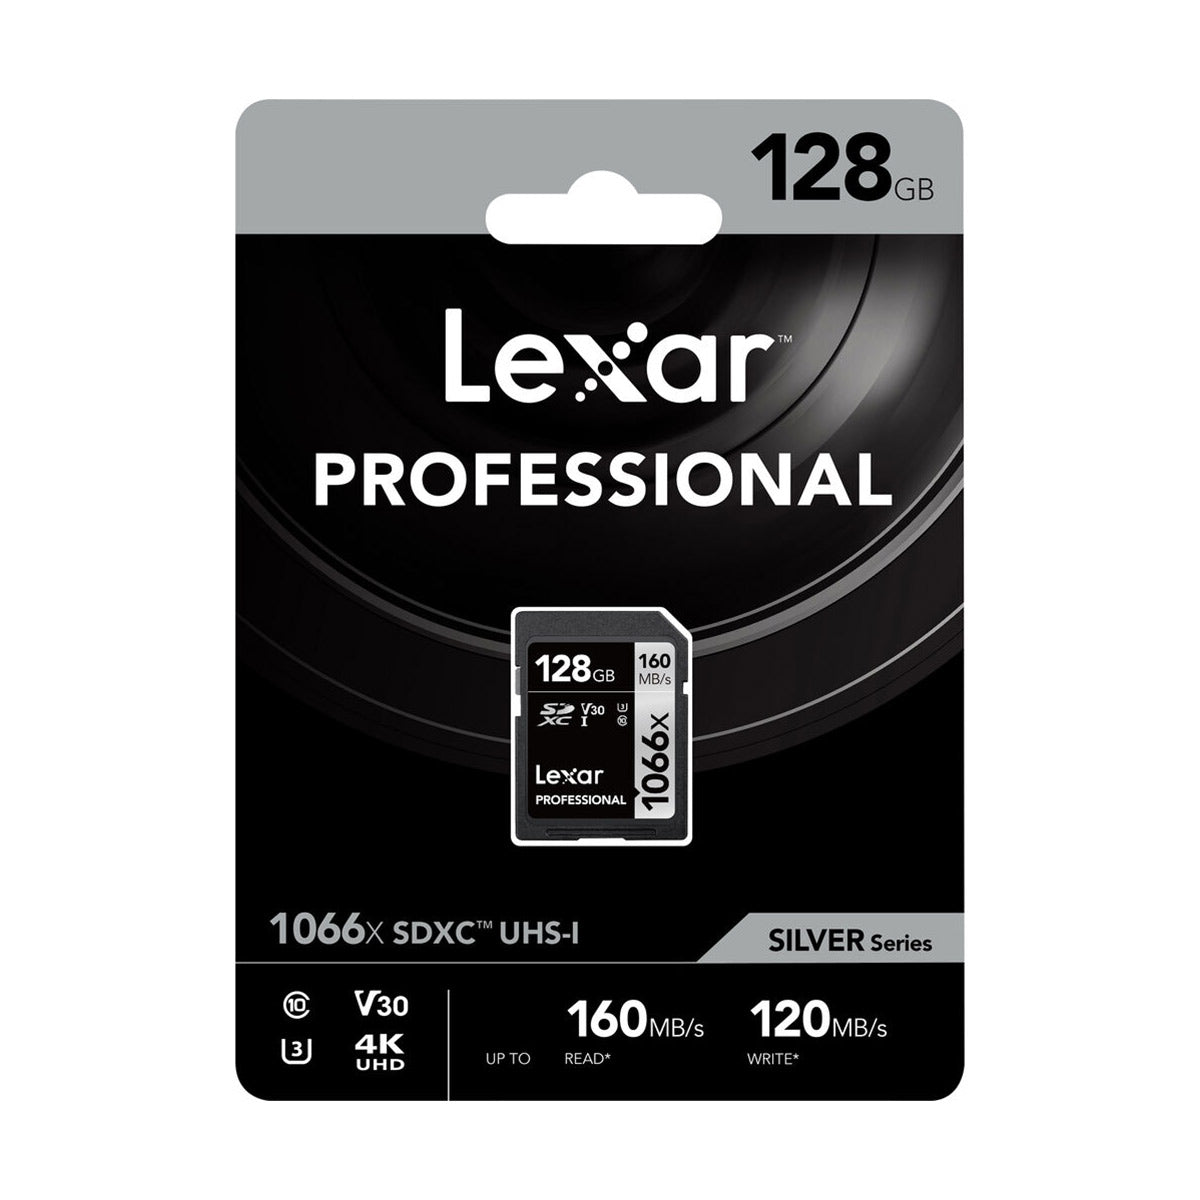 Lexar 128GB Professional 1066x UHS-I V30 SDXC Memory Card